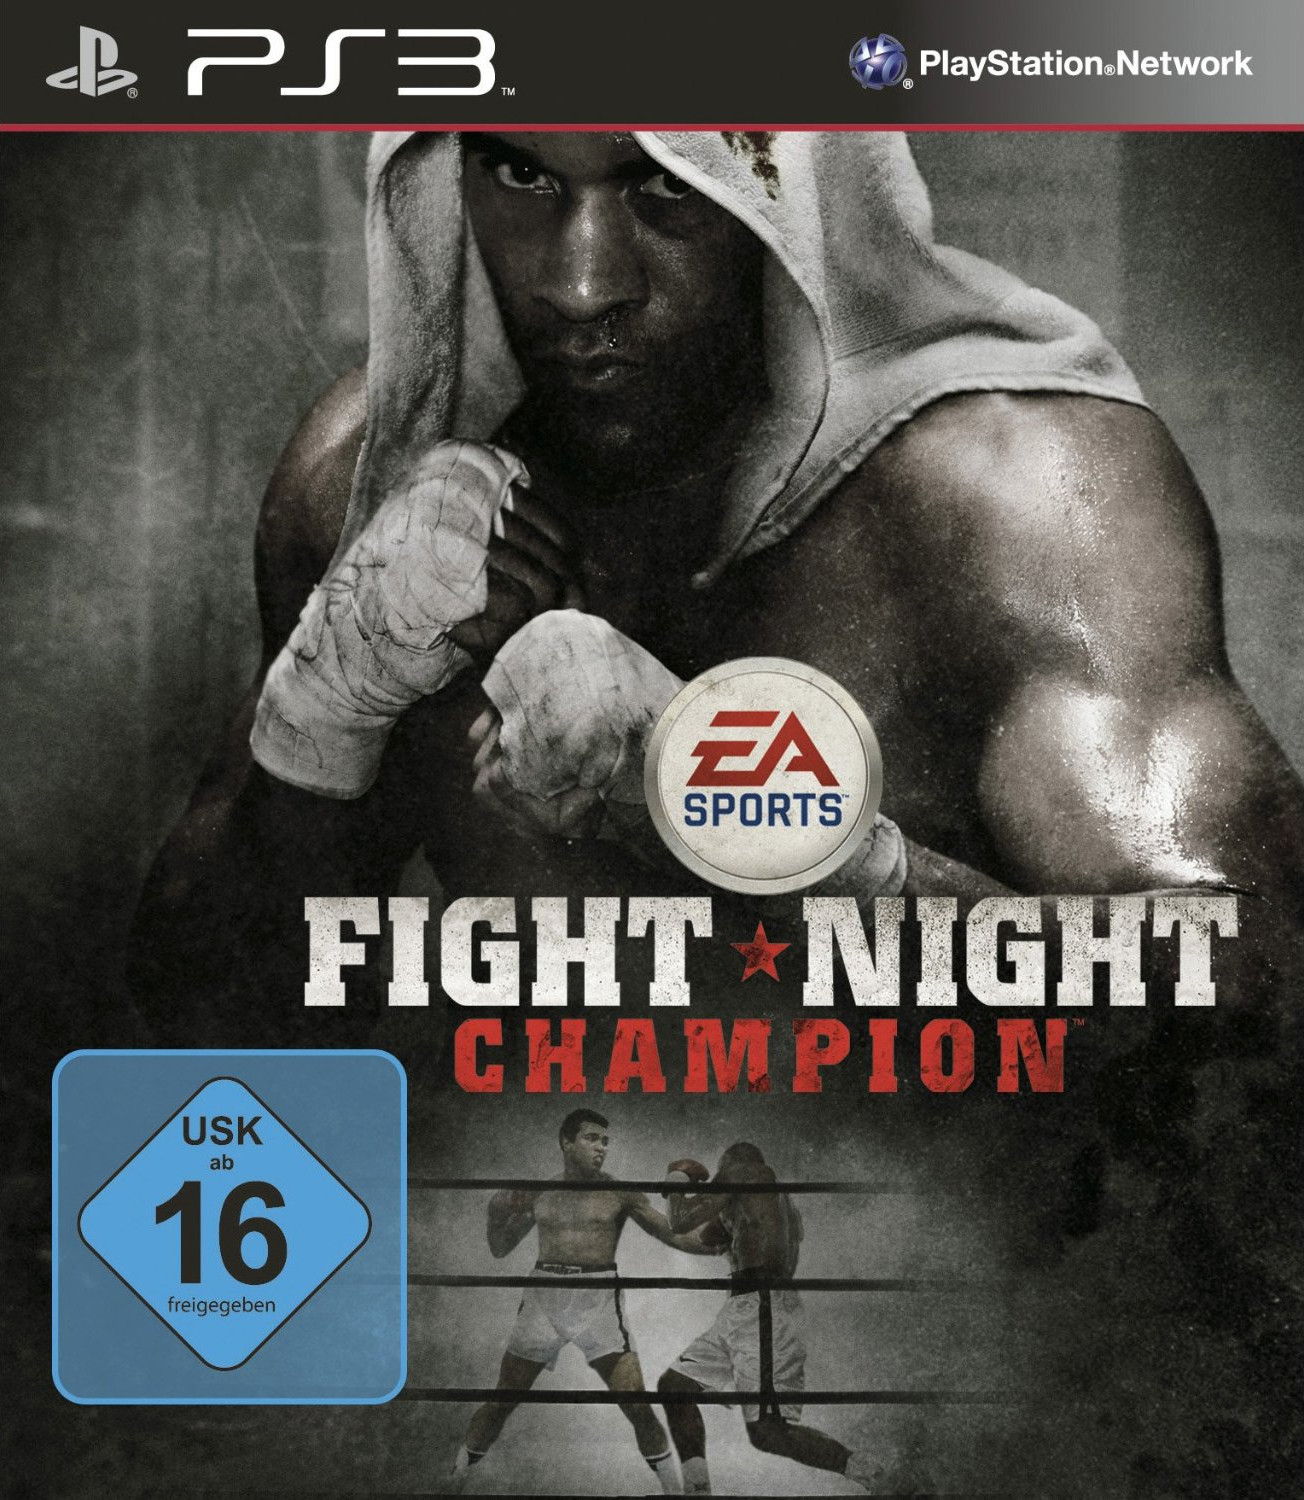 fight night champion keygen game pc